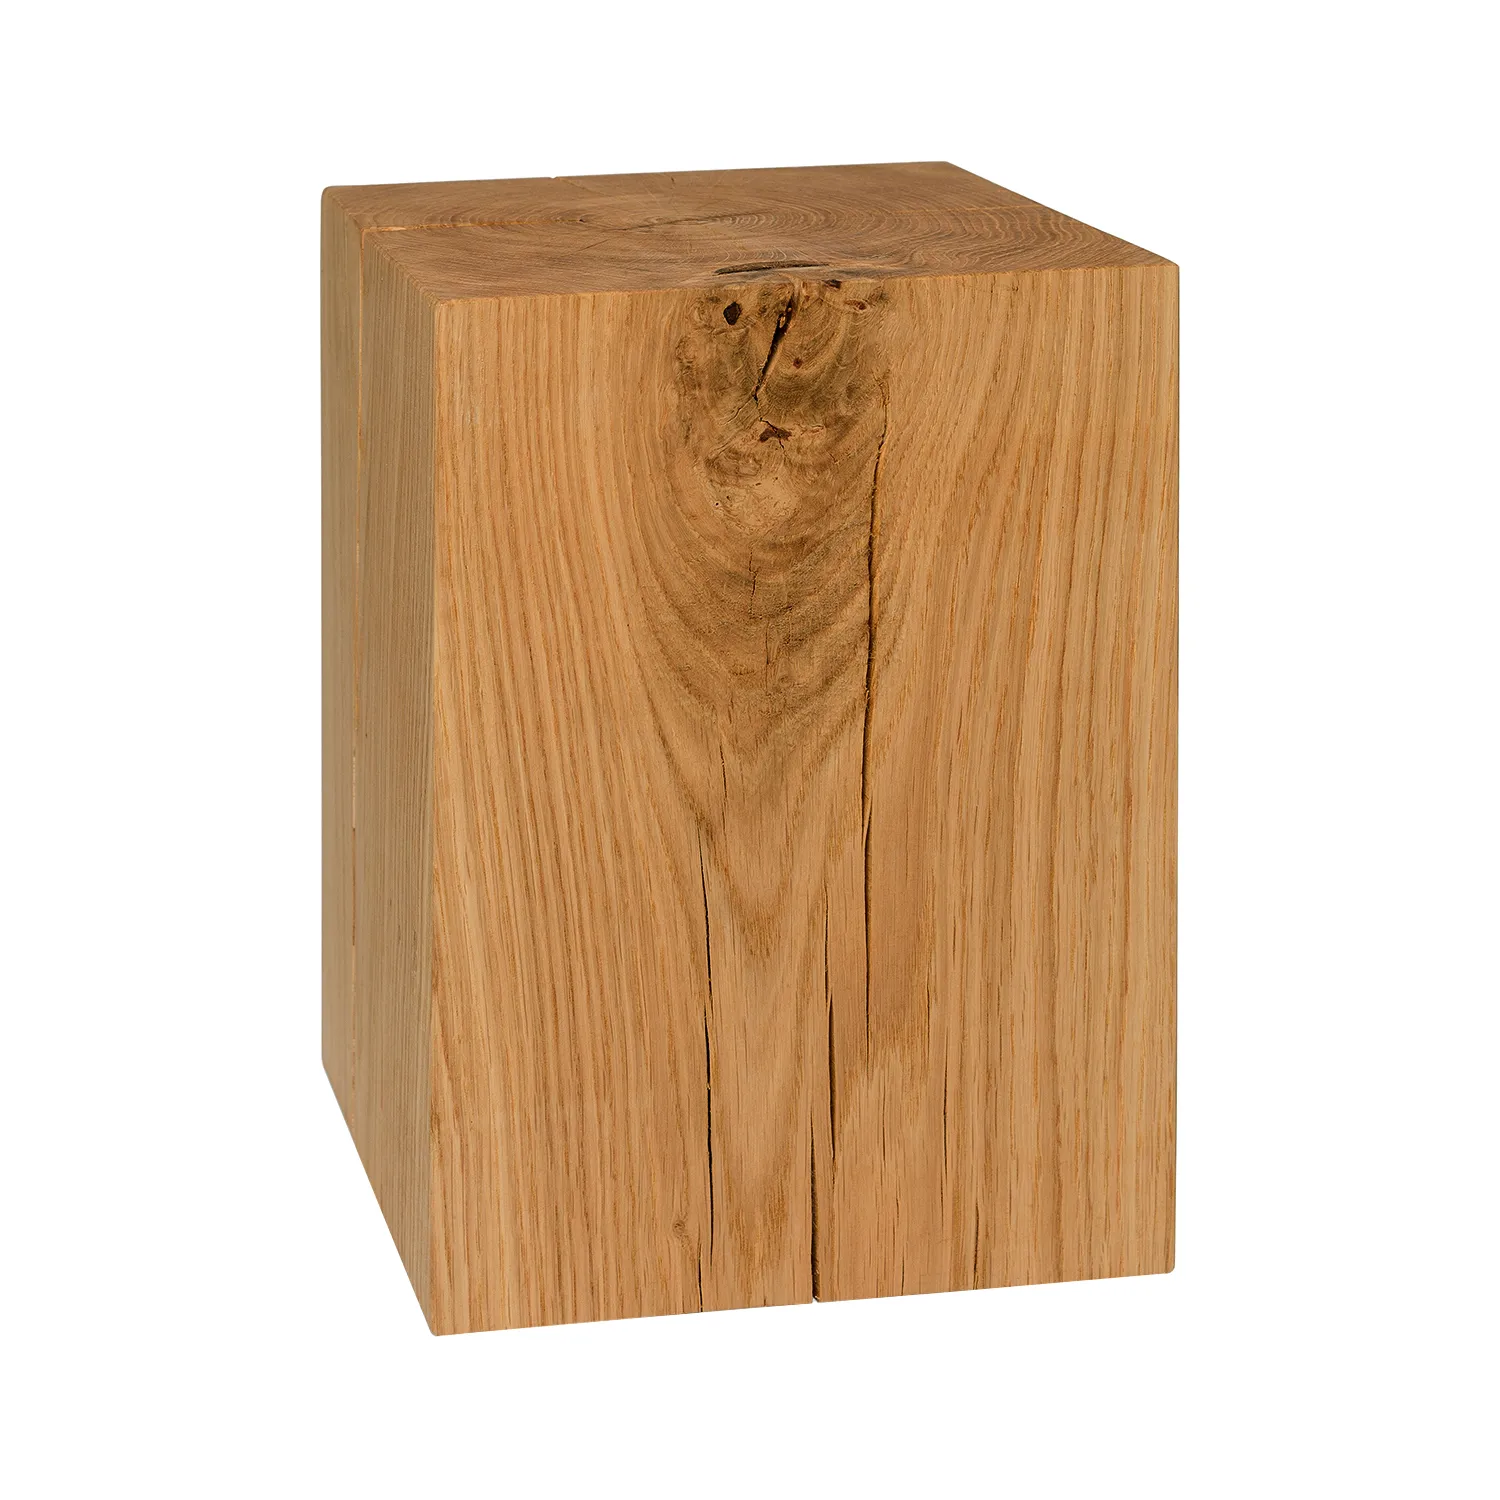 Holzblock aus Eichenholz im Format 20x20 cm